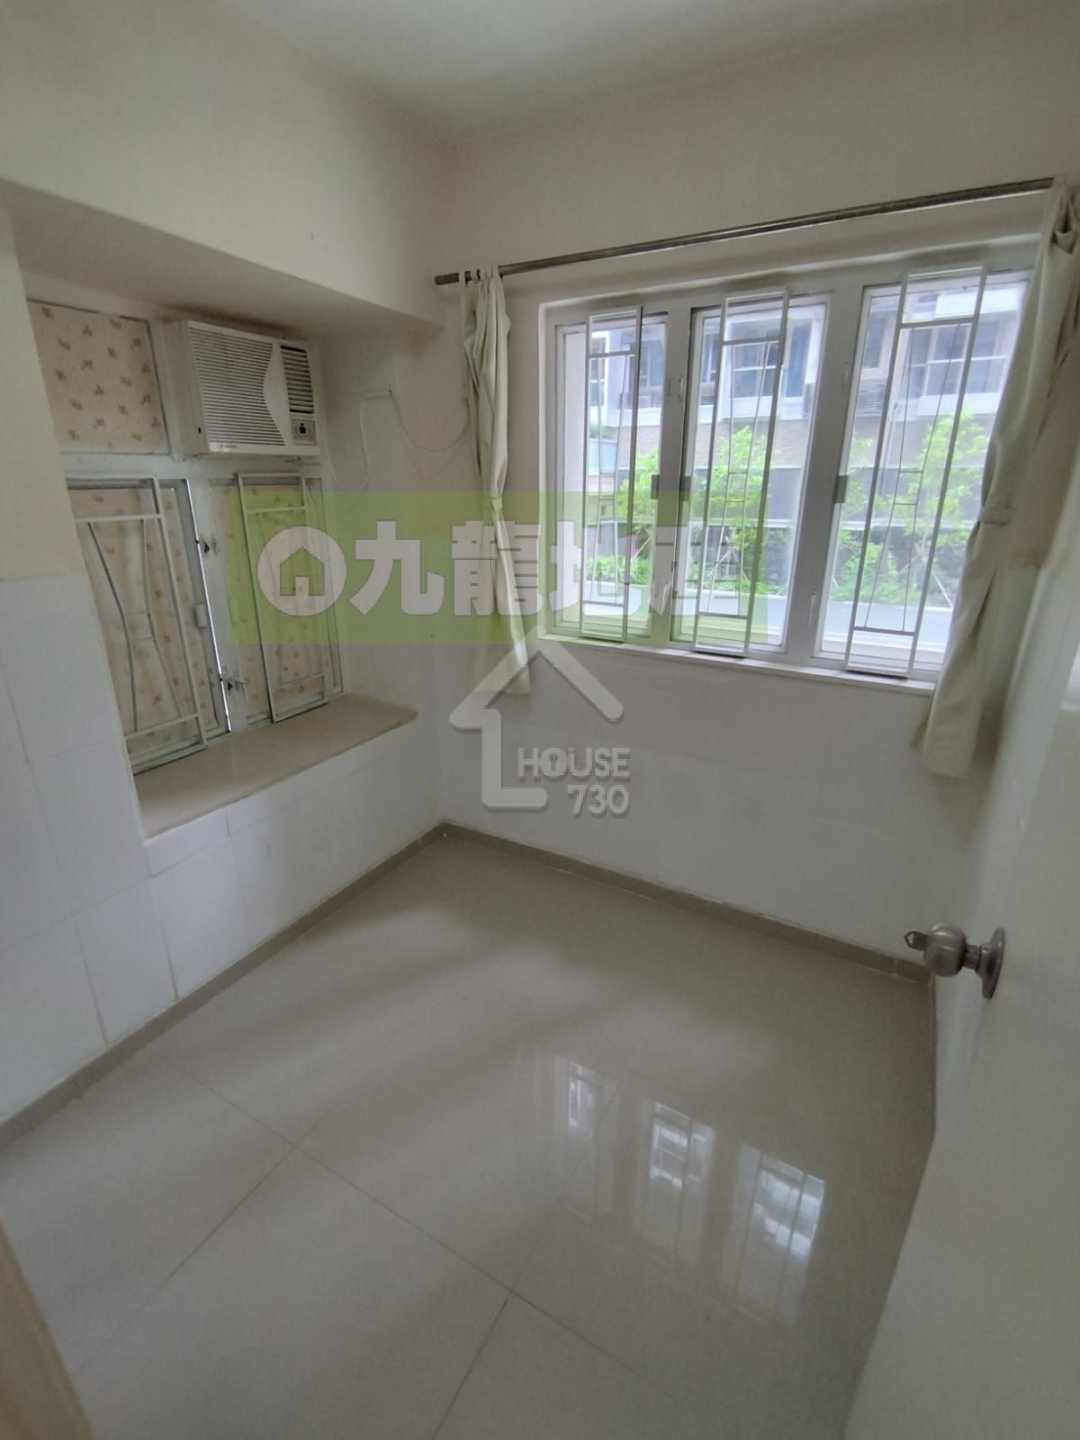 Sham Shui Po HAI TIN MANSION Middle Floor Bedroom 1 House730-6580209